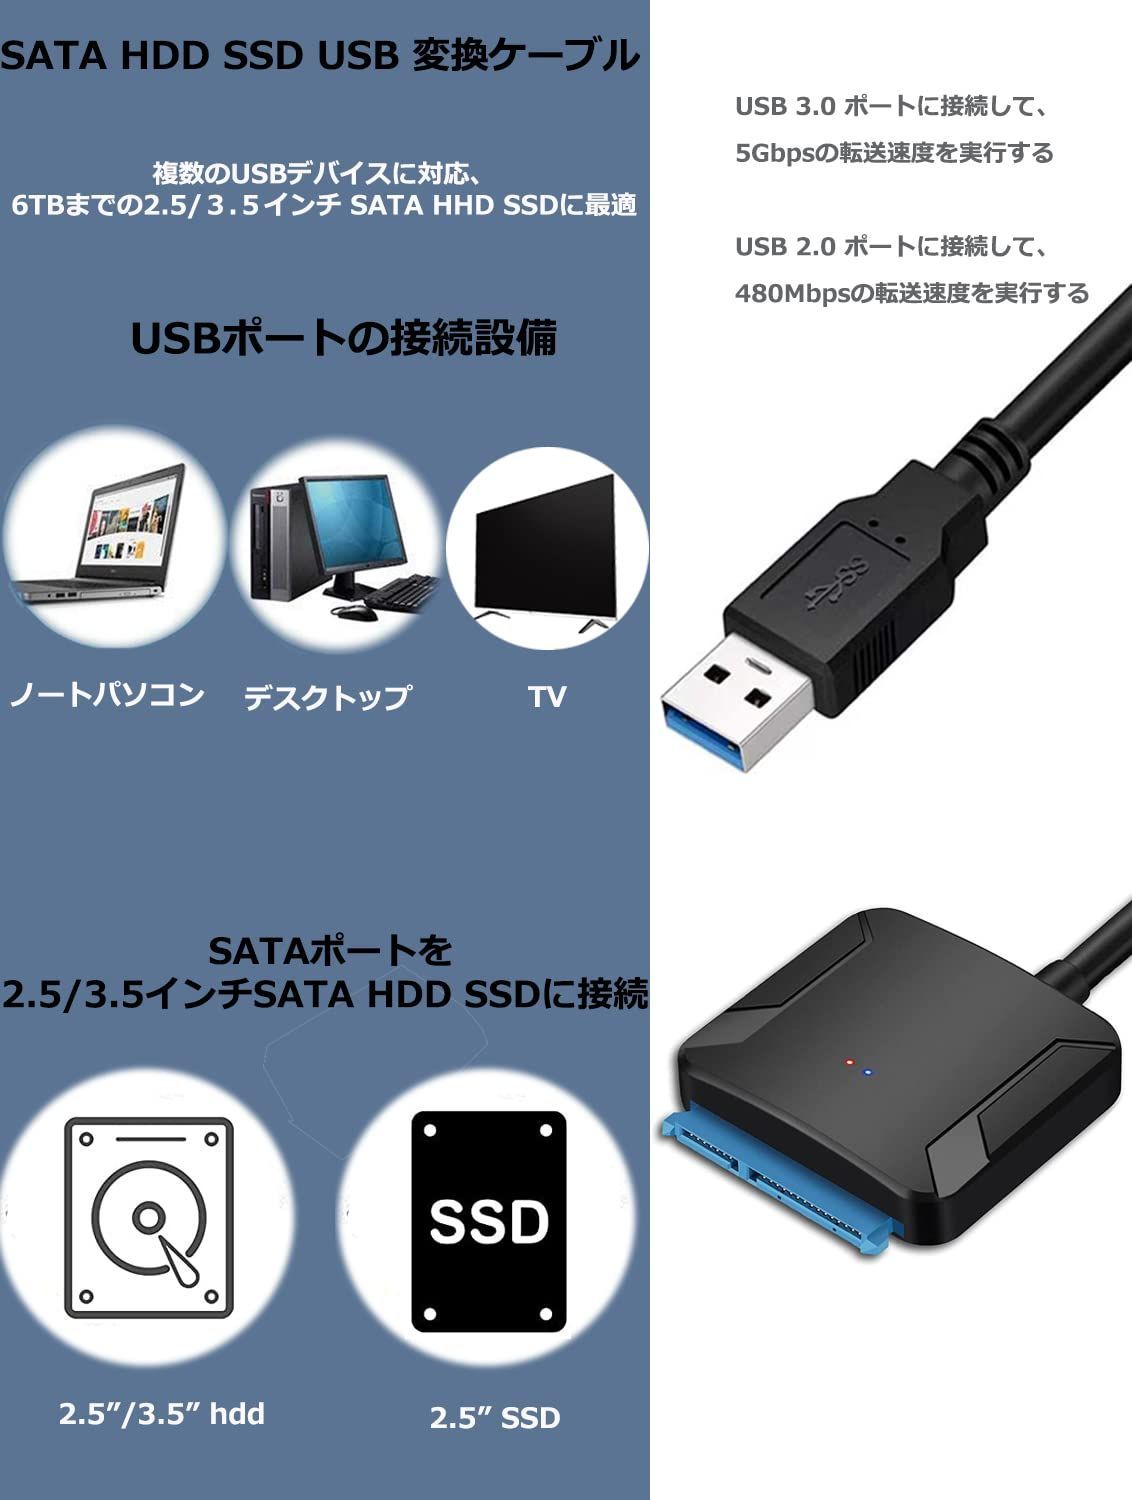 SATA変換ケーブル SATA USB変換アダプター SATA-USB3.0変換ケーブル 2.5インチHDD SSD SATA to USBケーブル 50cm HDD SSD換装キット